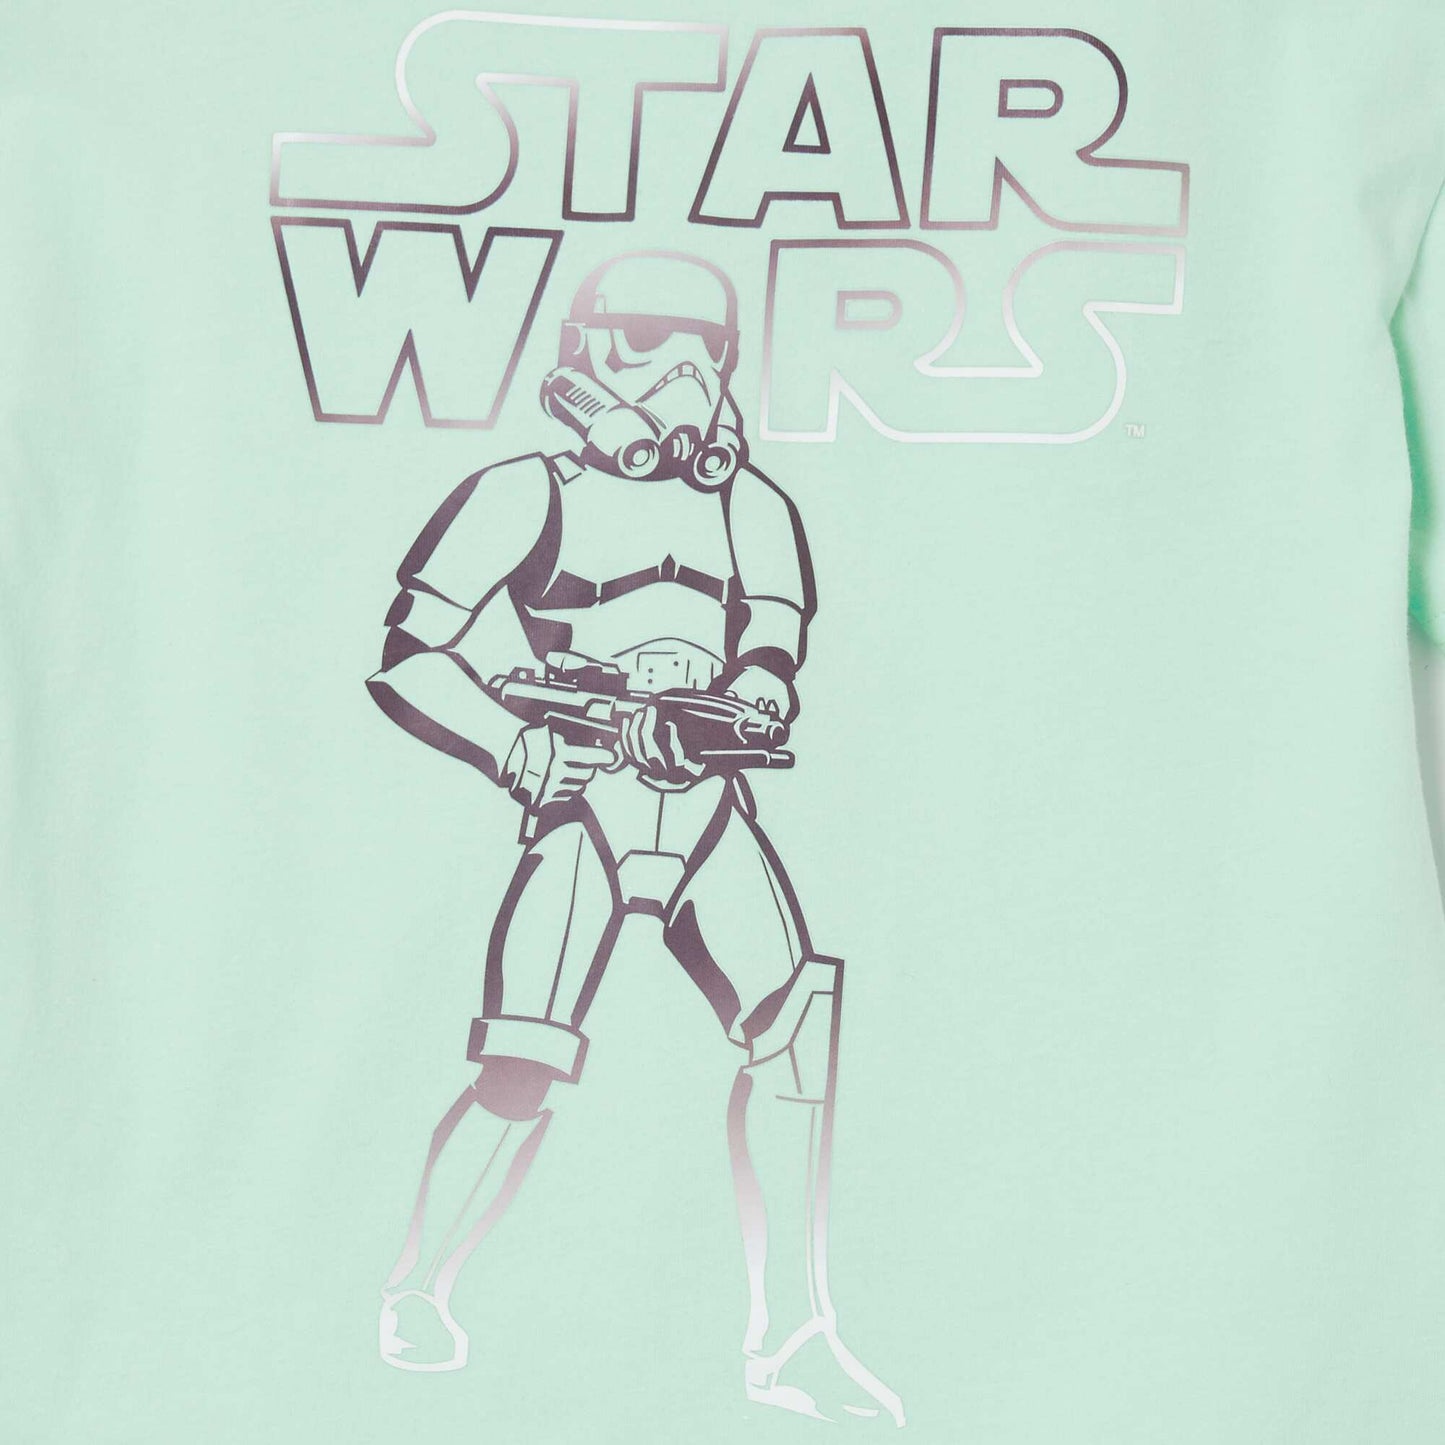 T-shirt loose 'Star Wars' Vert